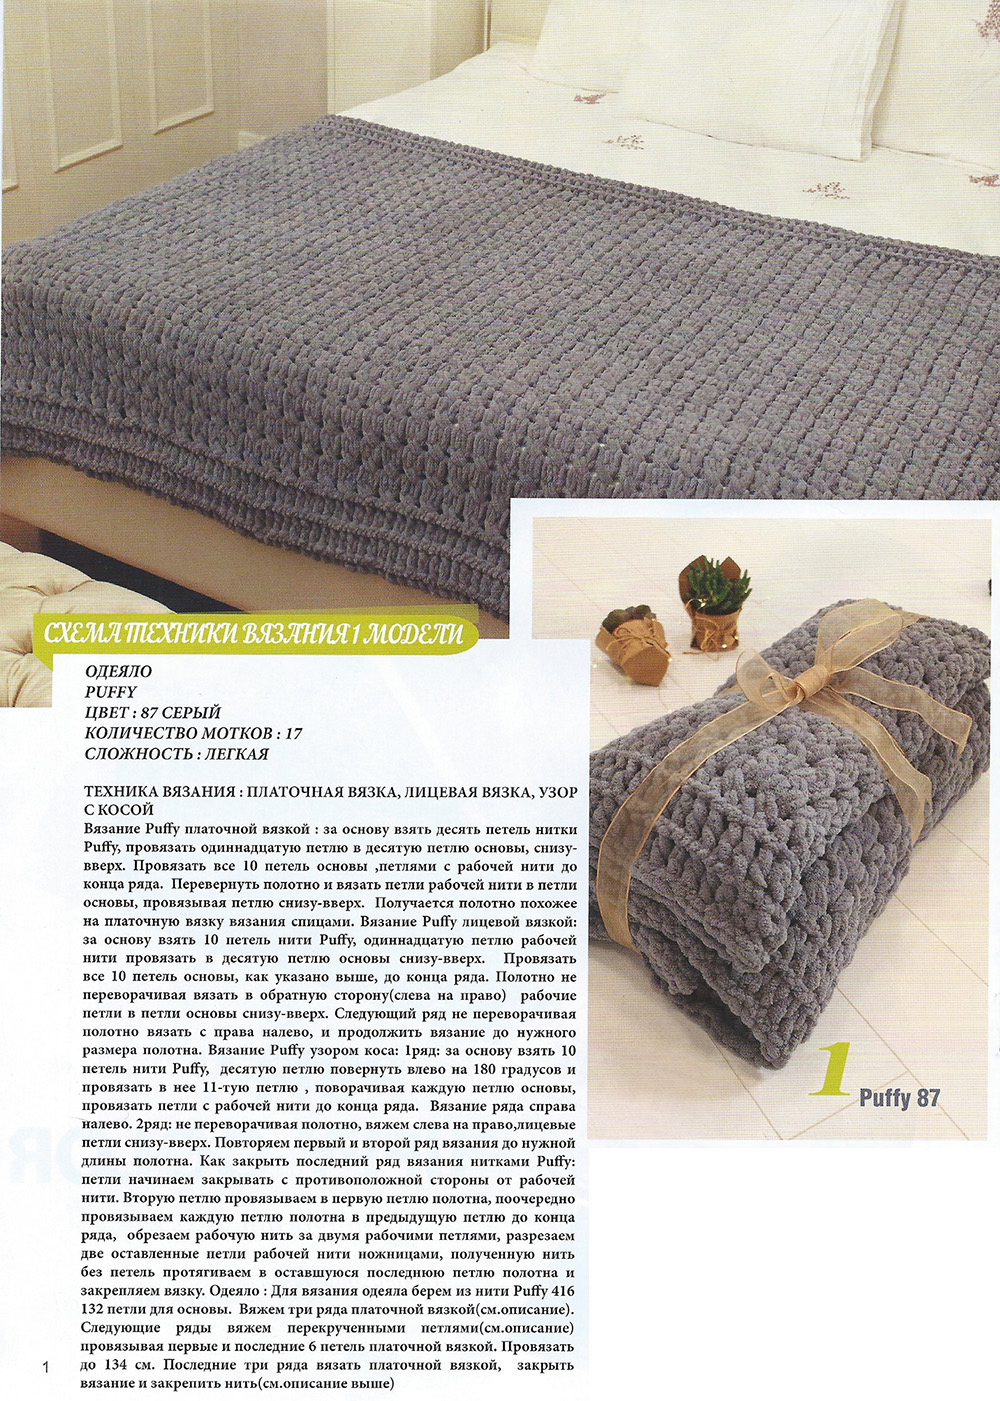 Схема техники вязания одеяла из пряжи PUFFY